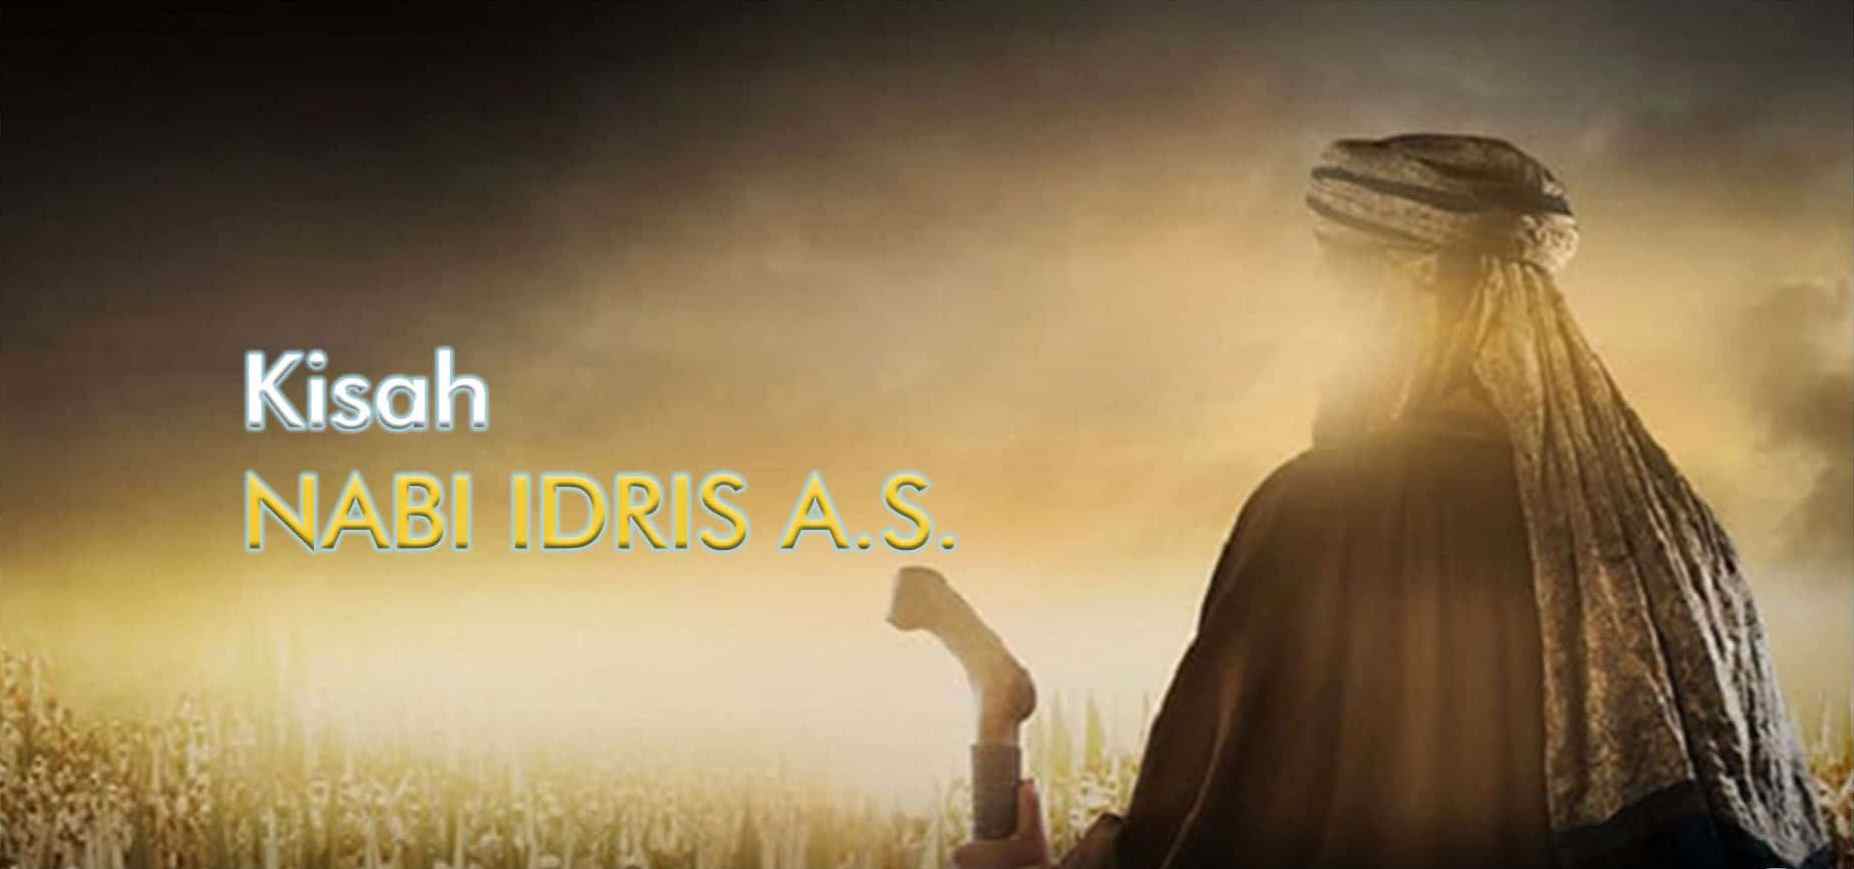 Kisah Singkat Nabi Idris as - Karya Ilmu Pengetahuan